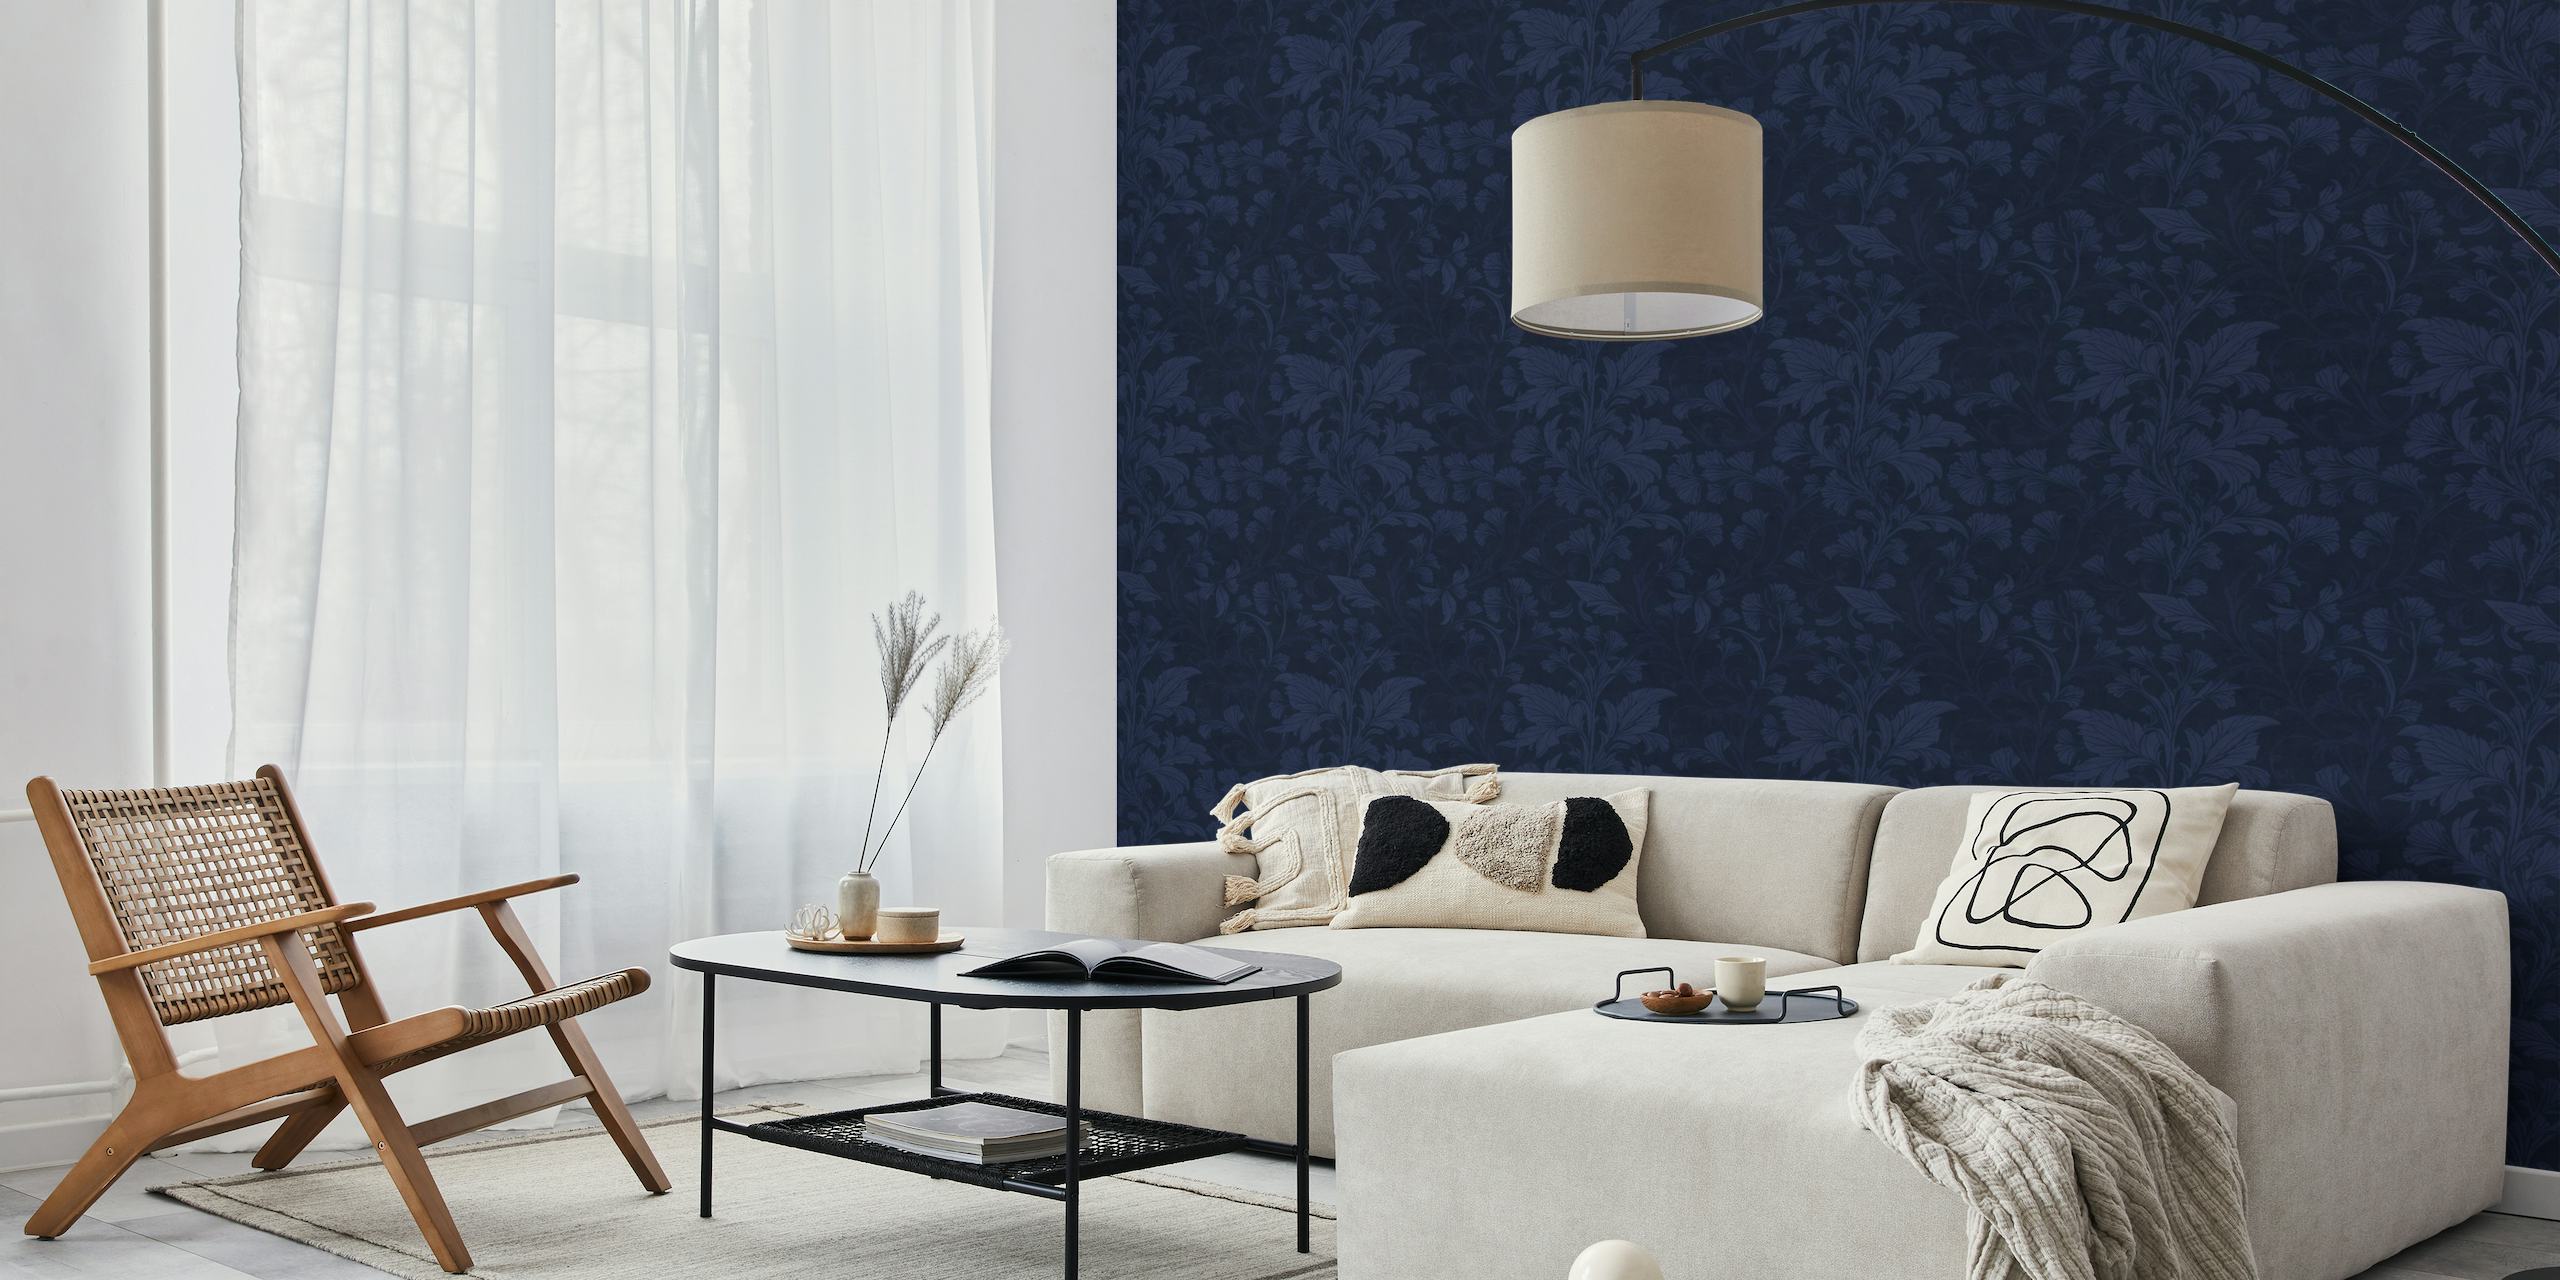 William Morris Style Monochrome Flourish Damask Pattern Midnight Blue behang